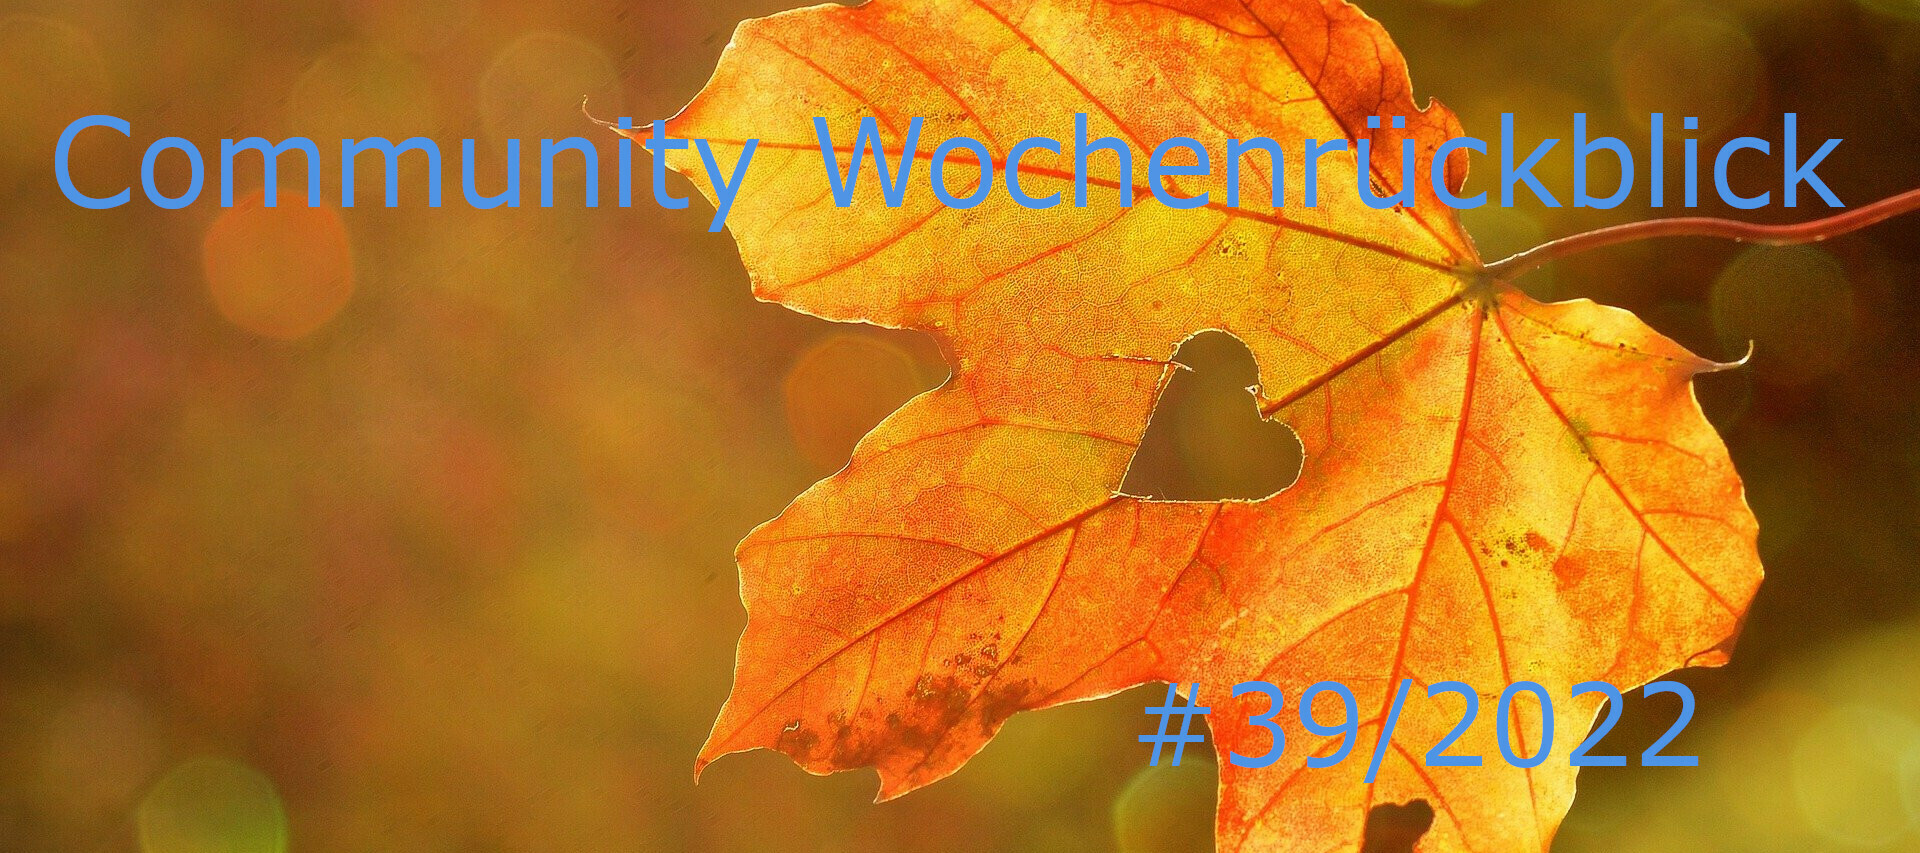 Community Wochenrückblick #39/2022